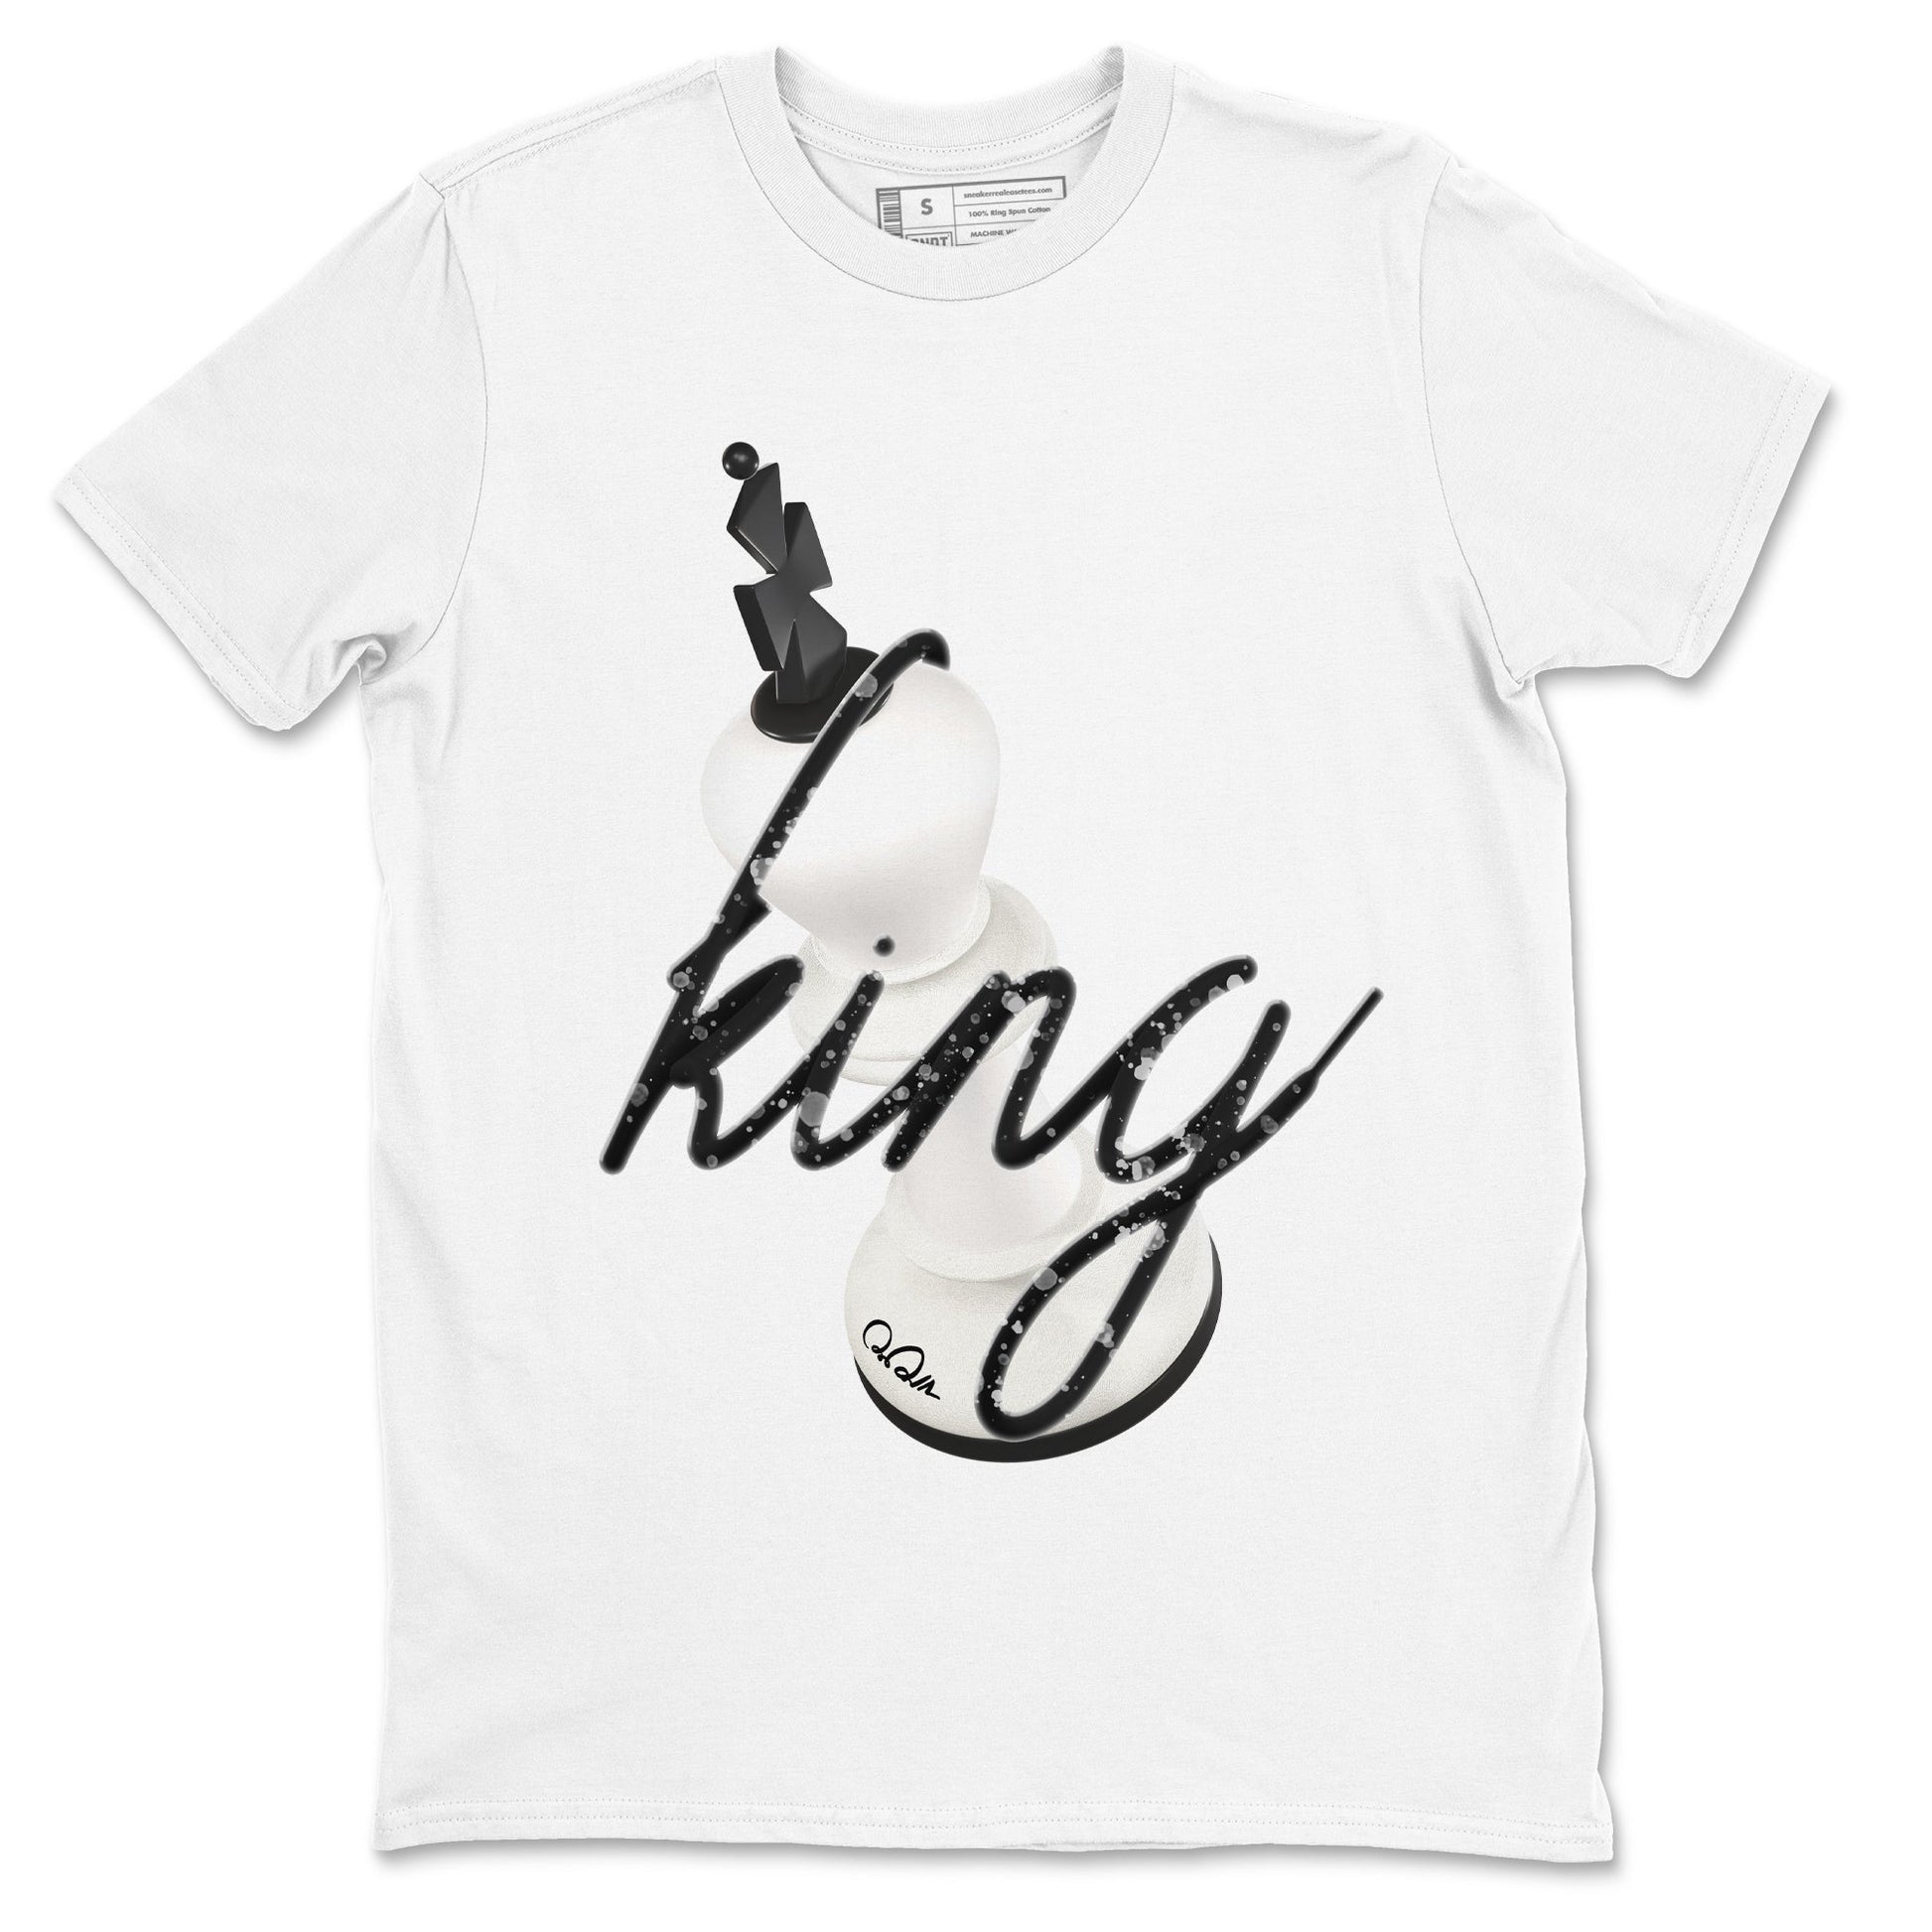 5s Sail shirt to match jordans 3D King sneaker tees Air Jordan 5 Sail SNRT Sneaker Release Tees unisex cotton White 2 crew neck shirt